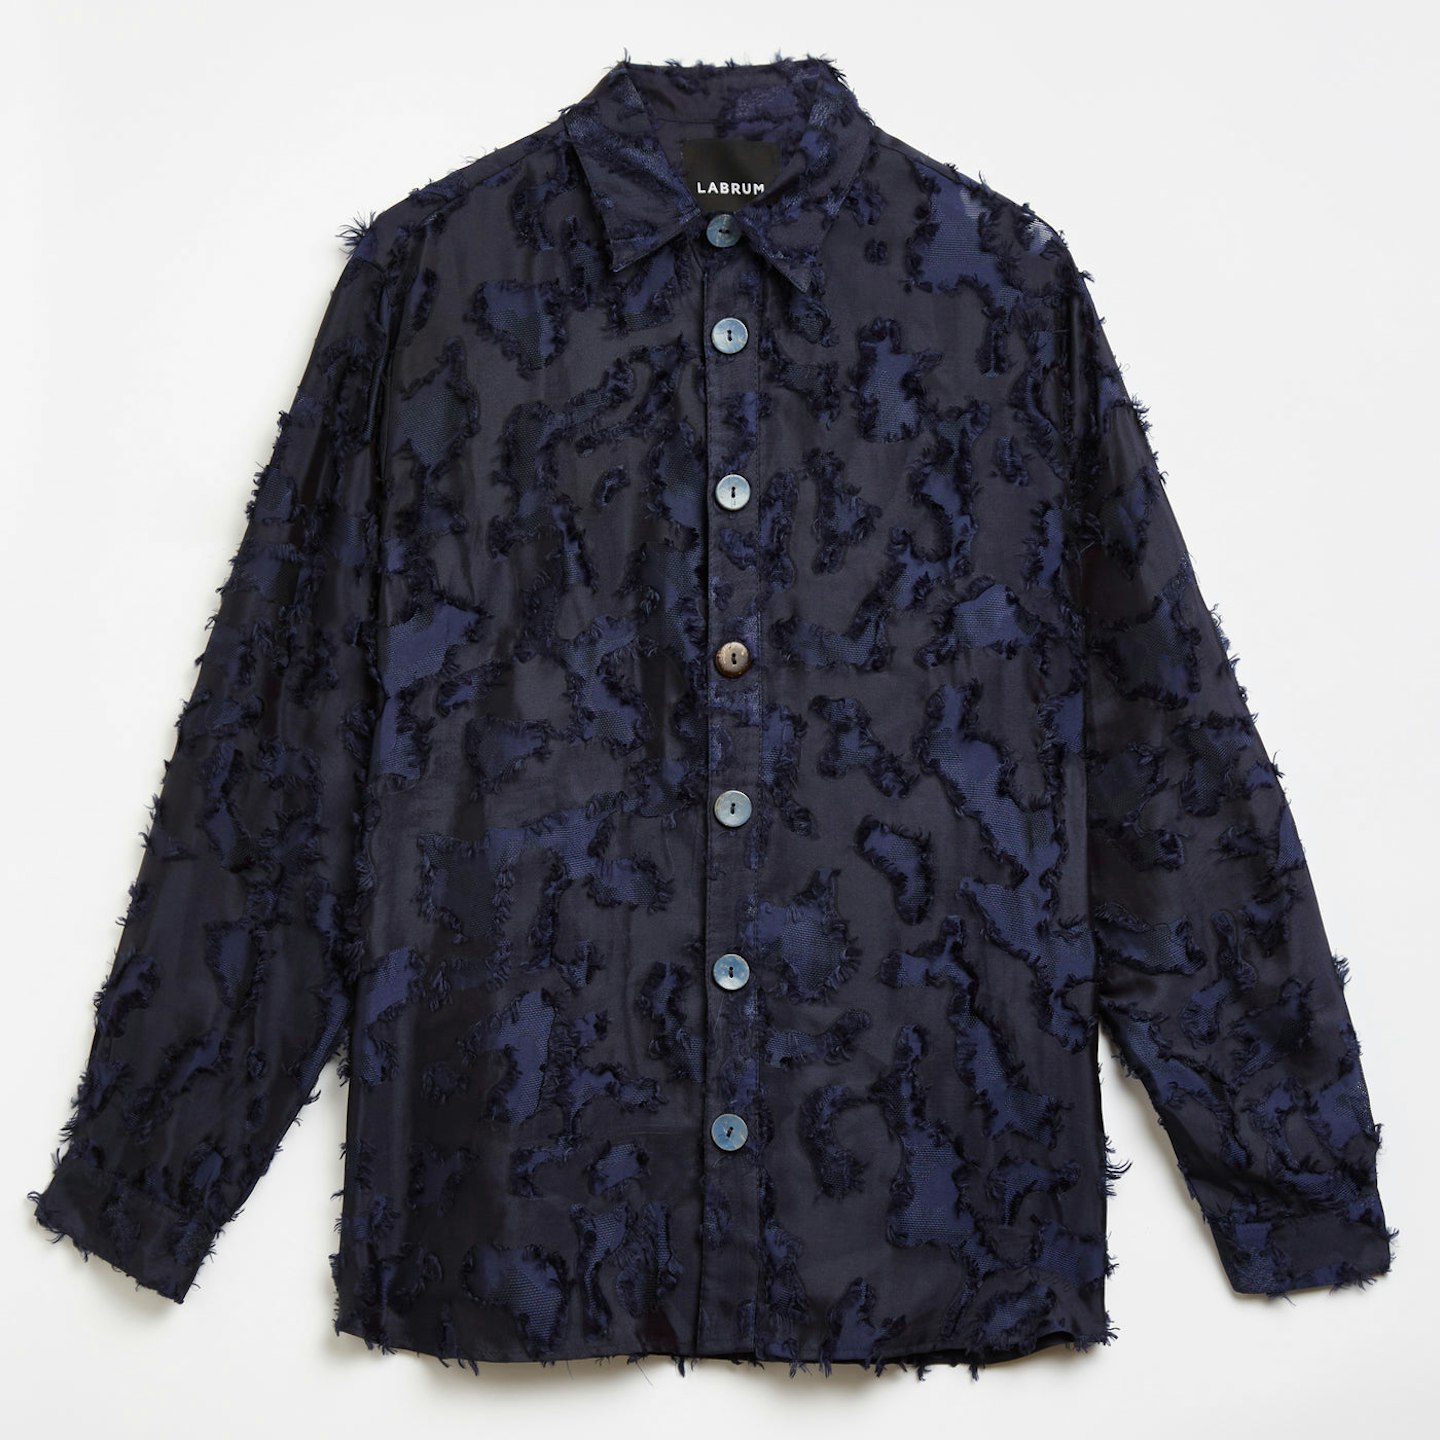 Labrum Royal Blue Textured Camo Shirt